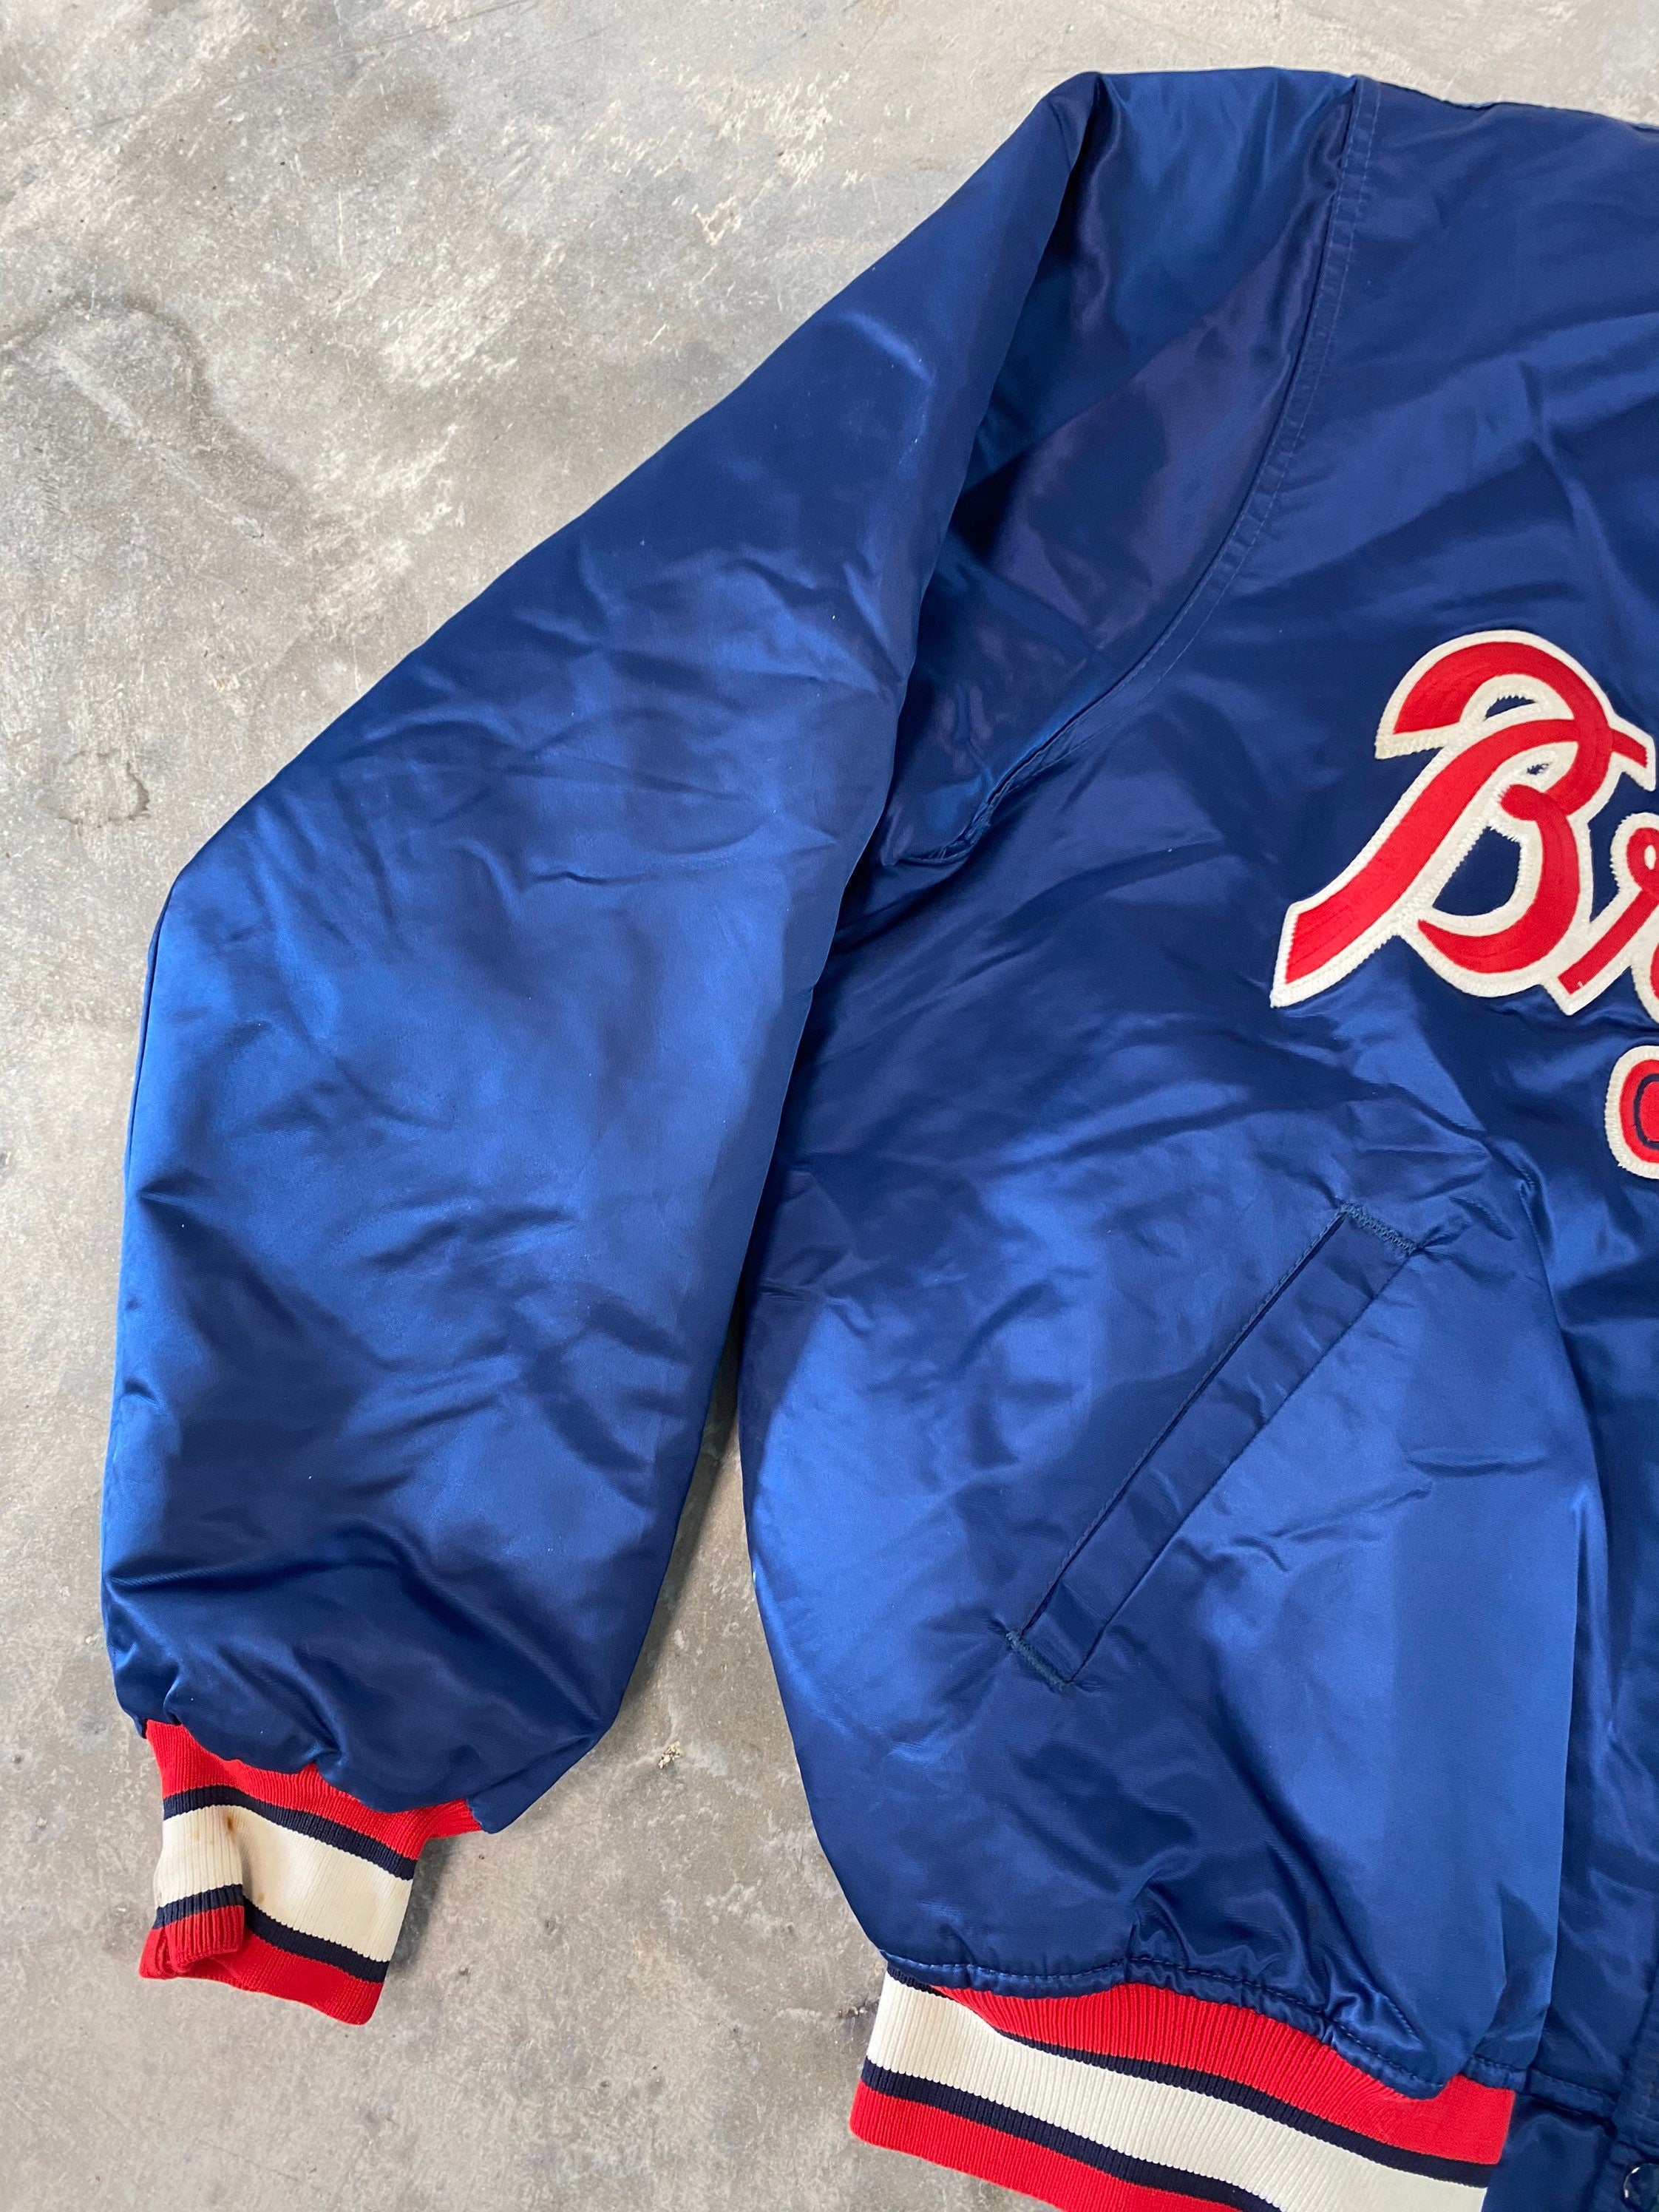 Atlanta Braves MLB Starter Vintage Full Zip Team Jacket